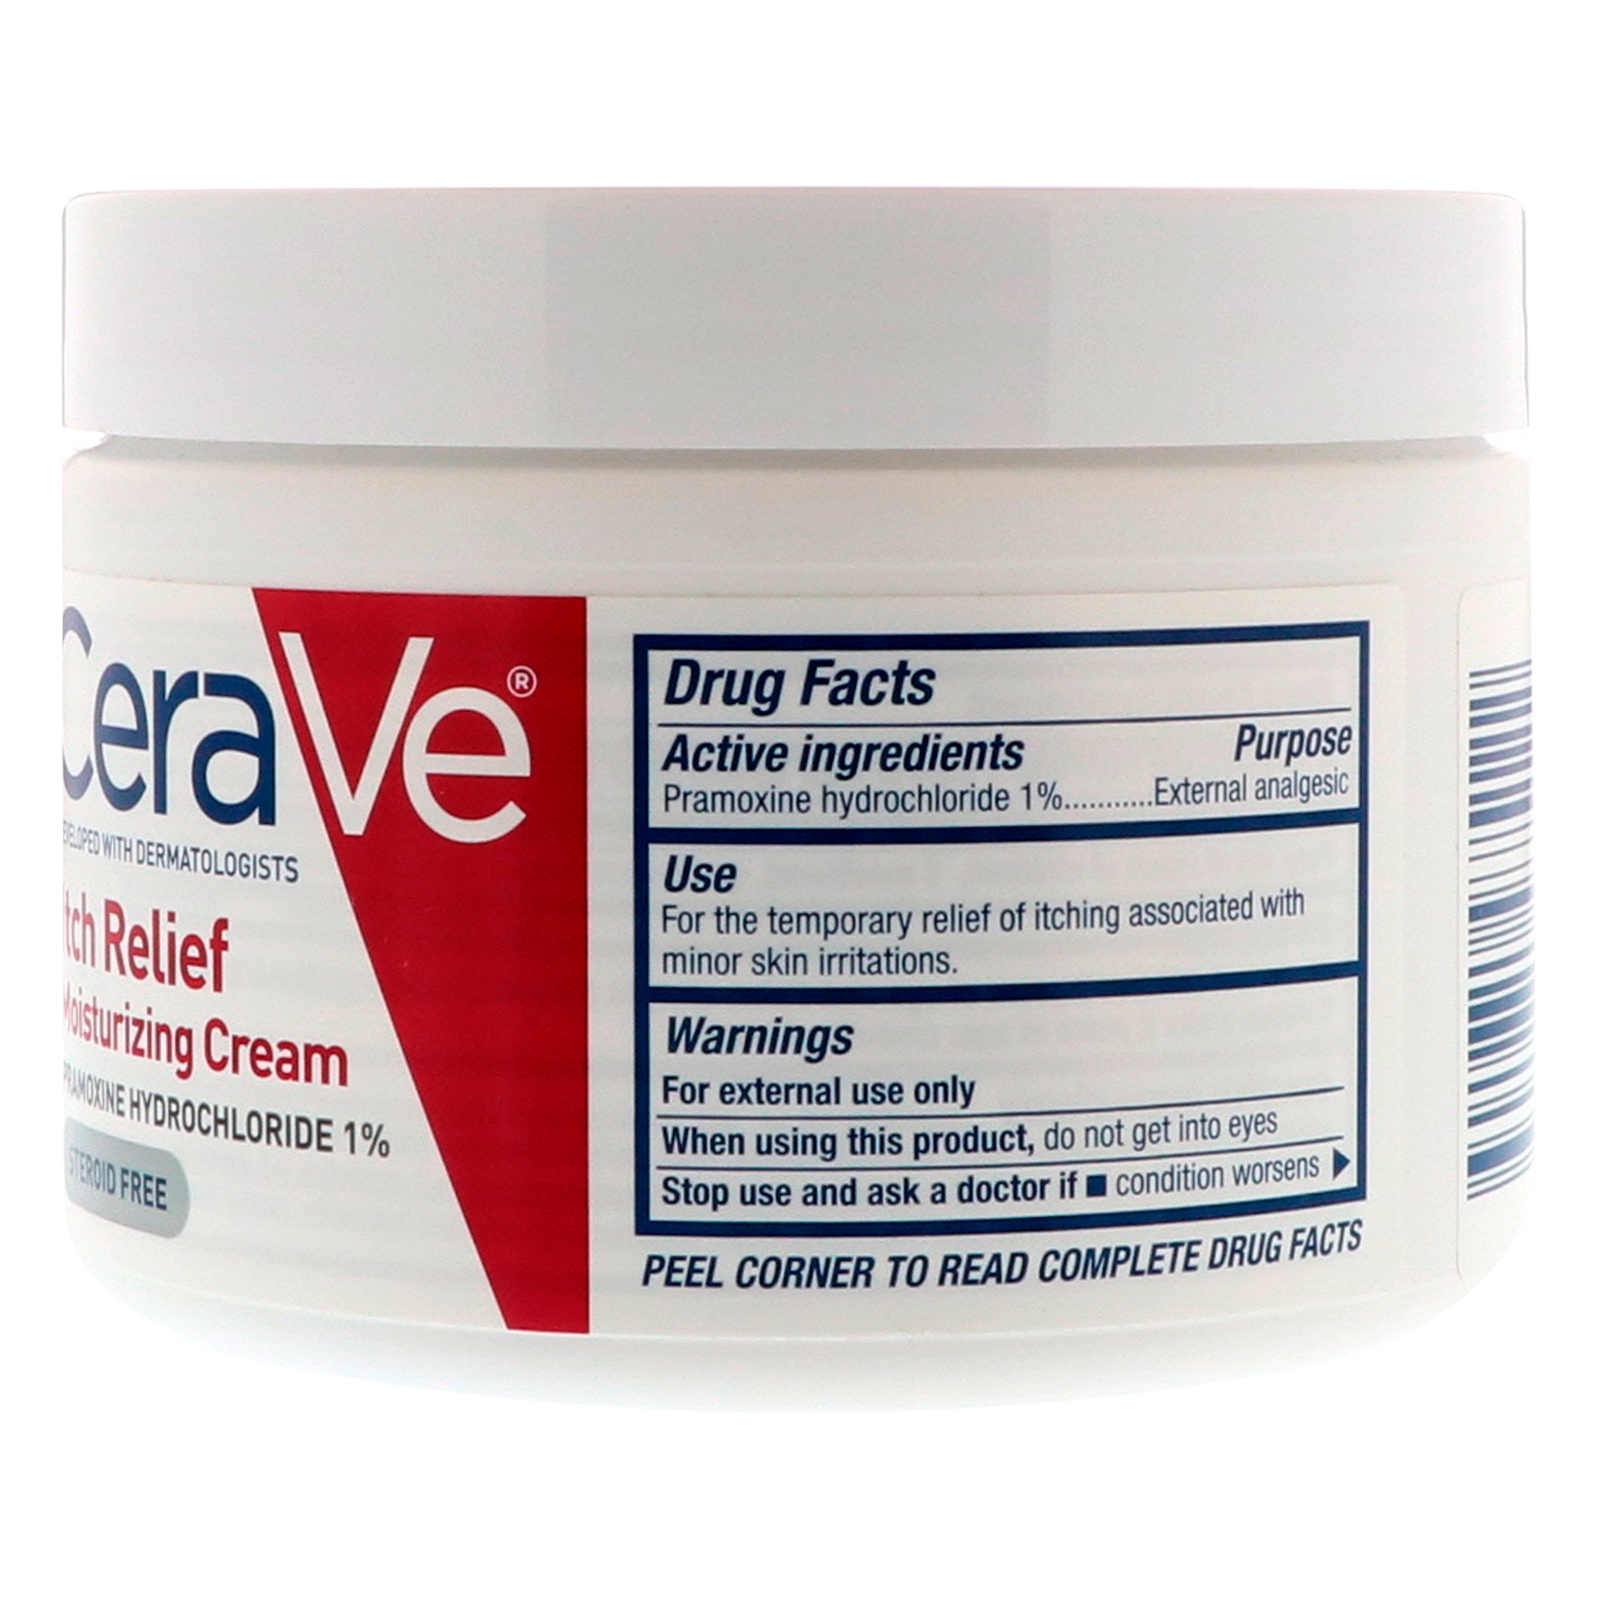 Cerave Itch Relief Moisturizing Cream 12 Oz 340 G Iherb